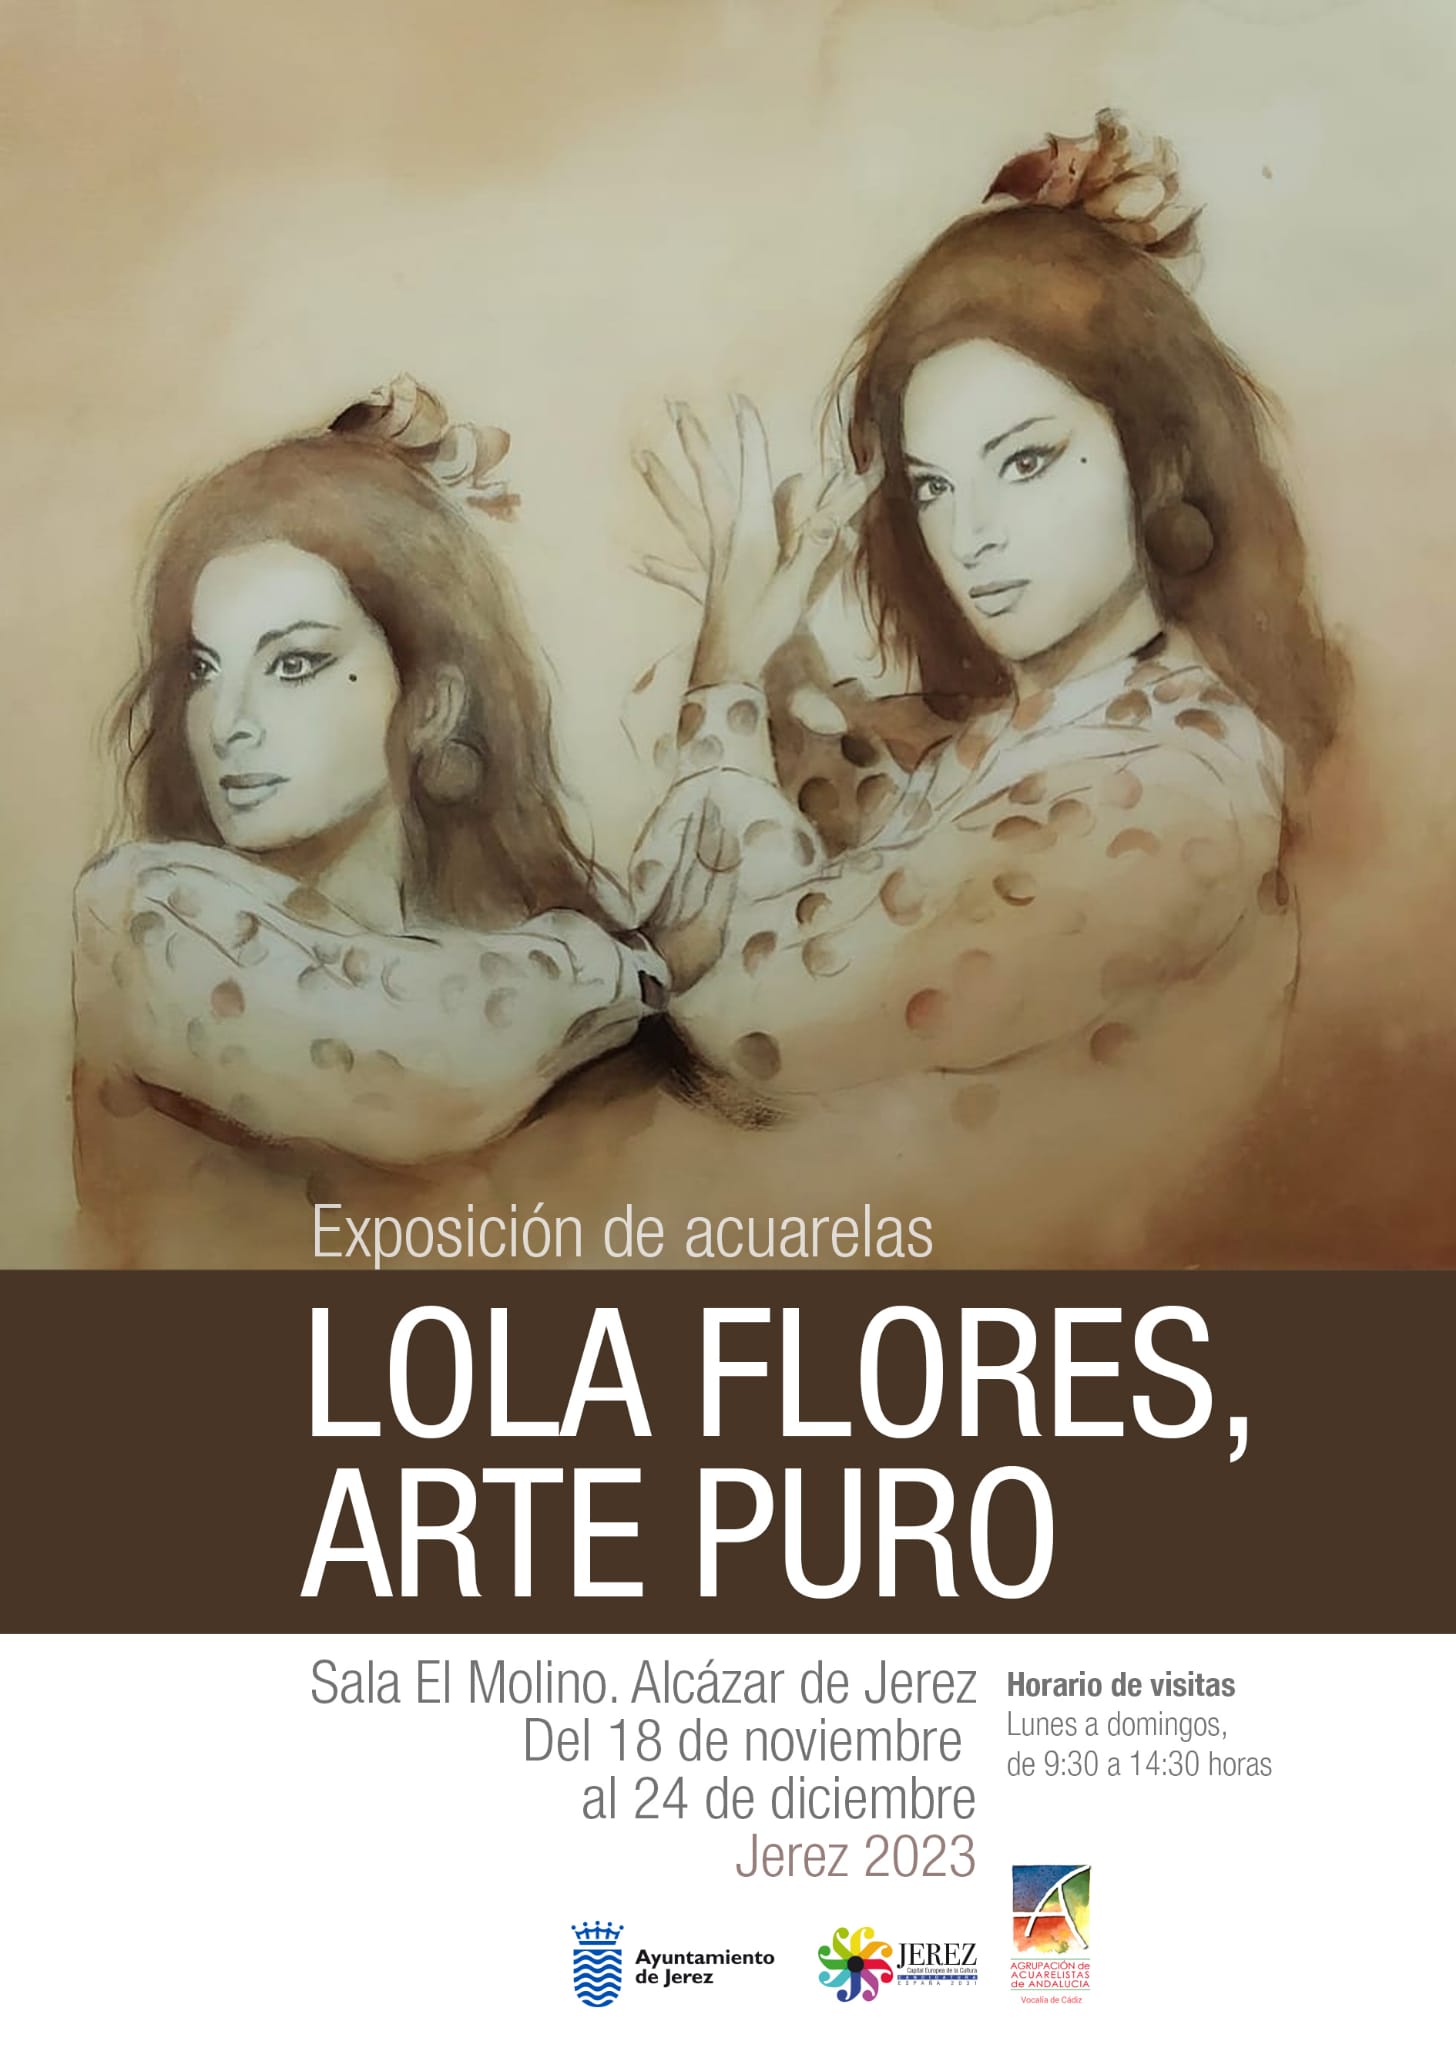 Lola Flores, Arte puro